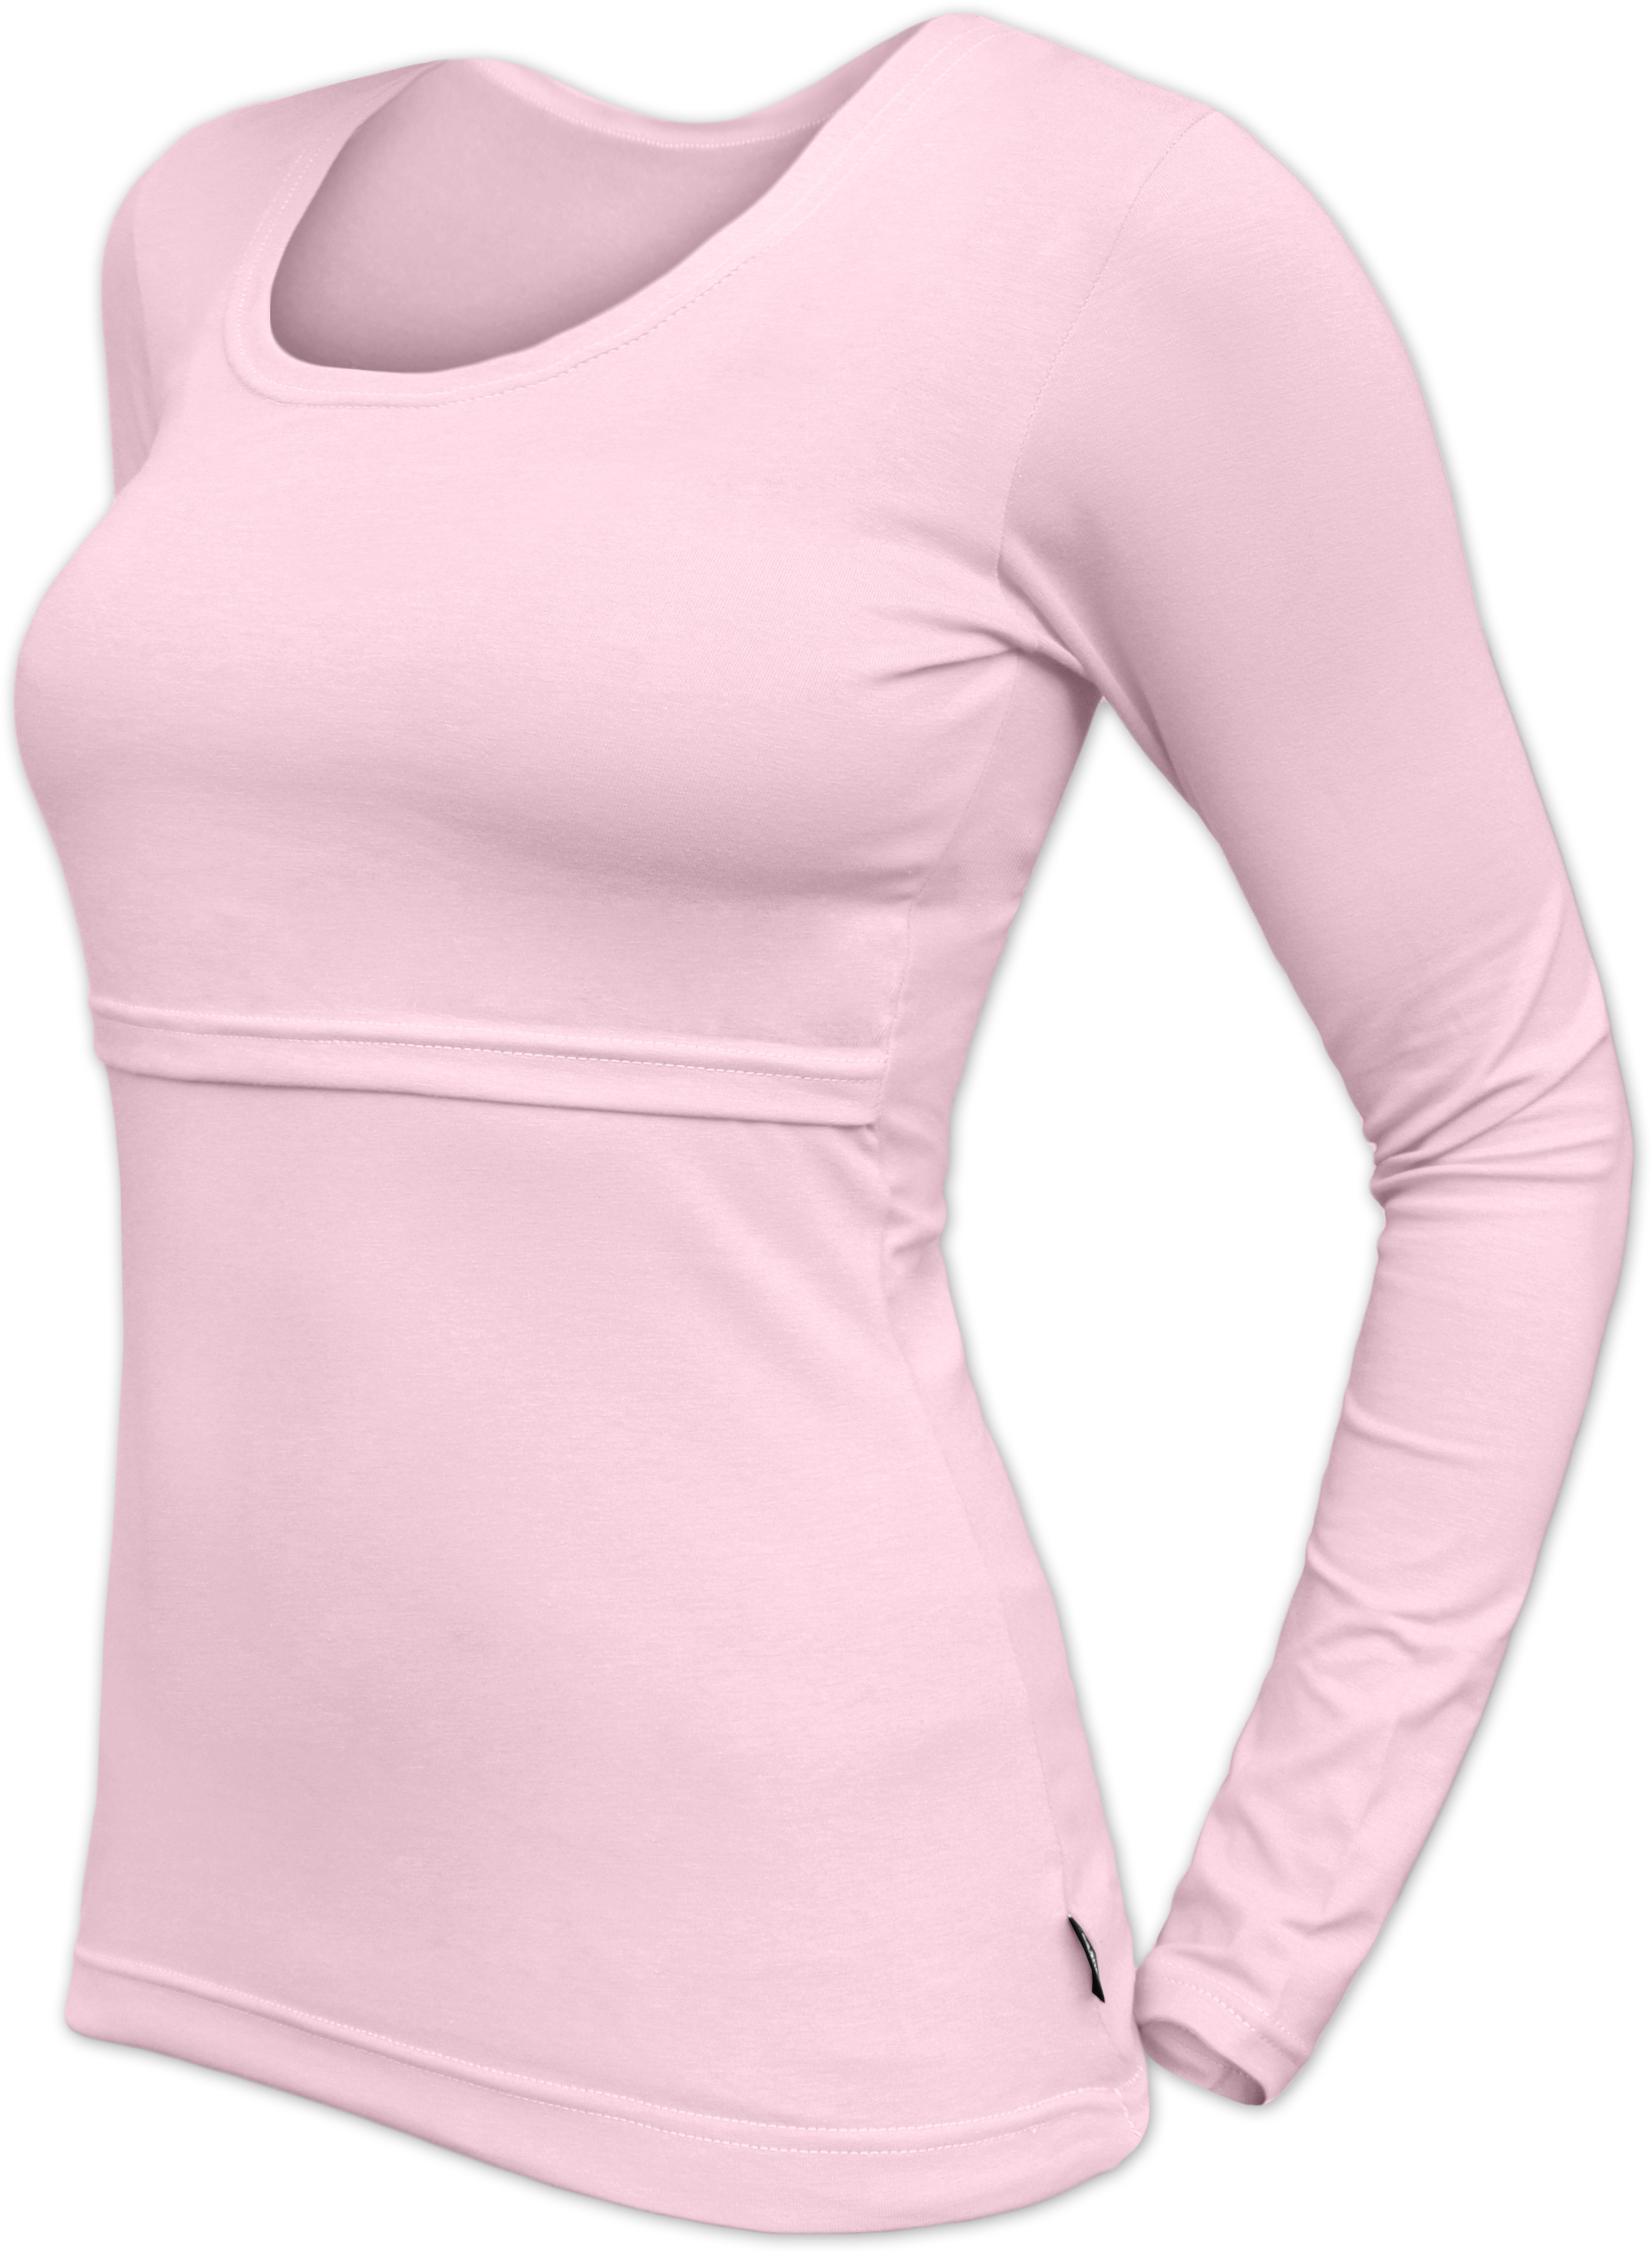 KATERINA- breast-feeding T-shirt, long sleeves, LIGHT PINK S/M